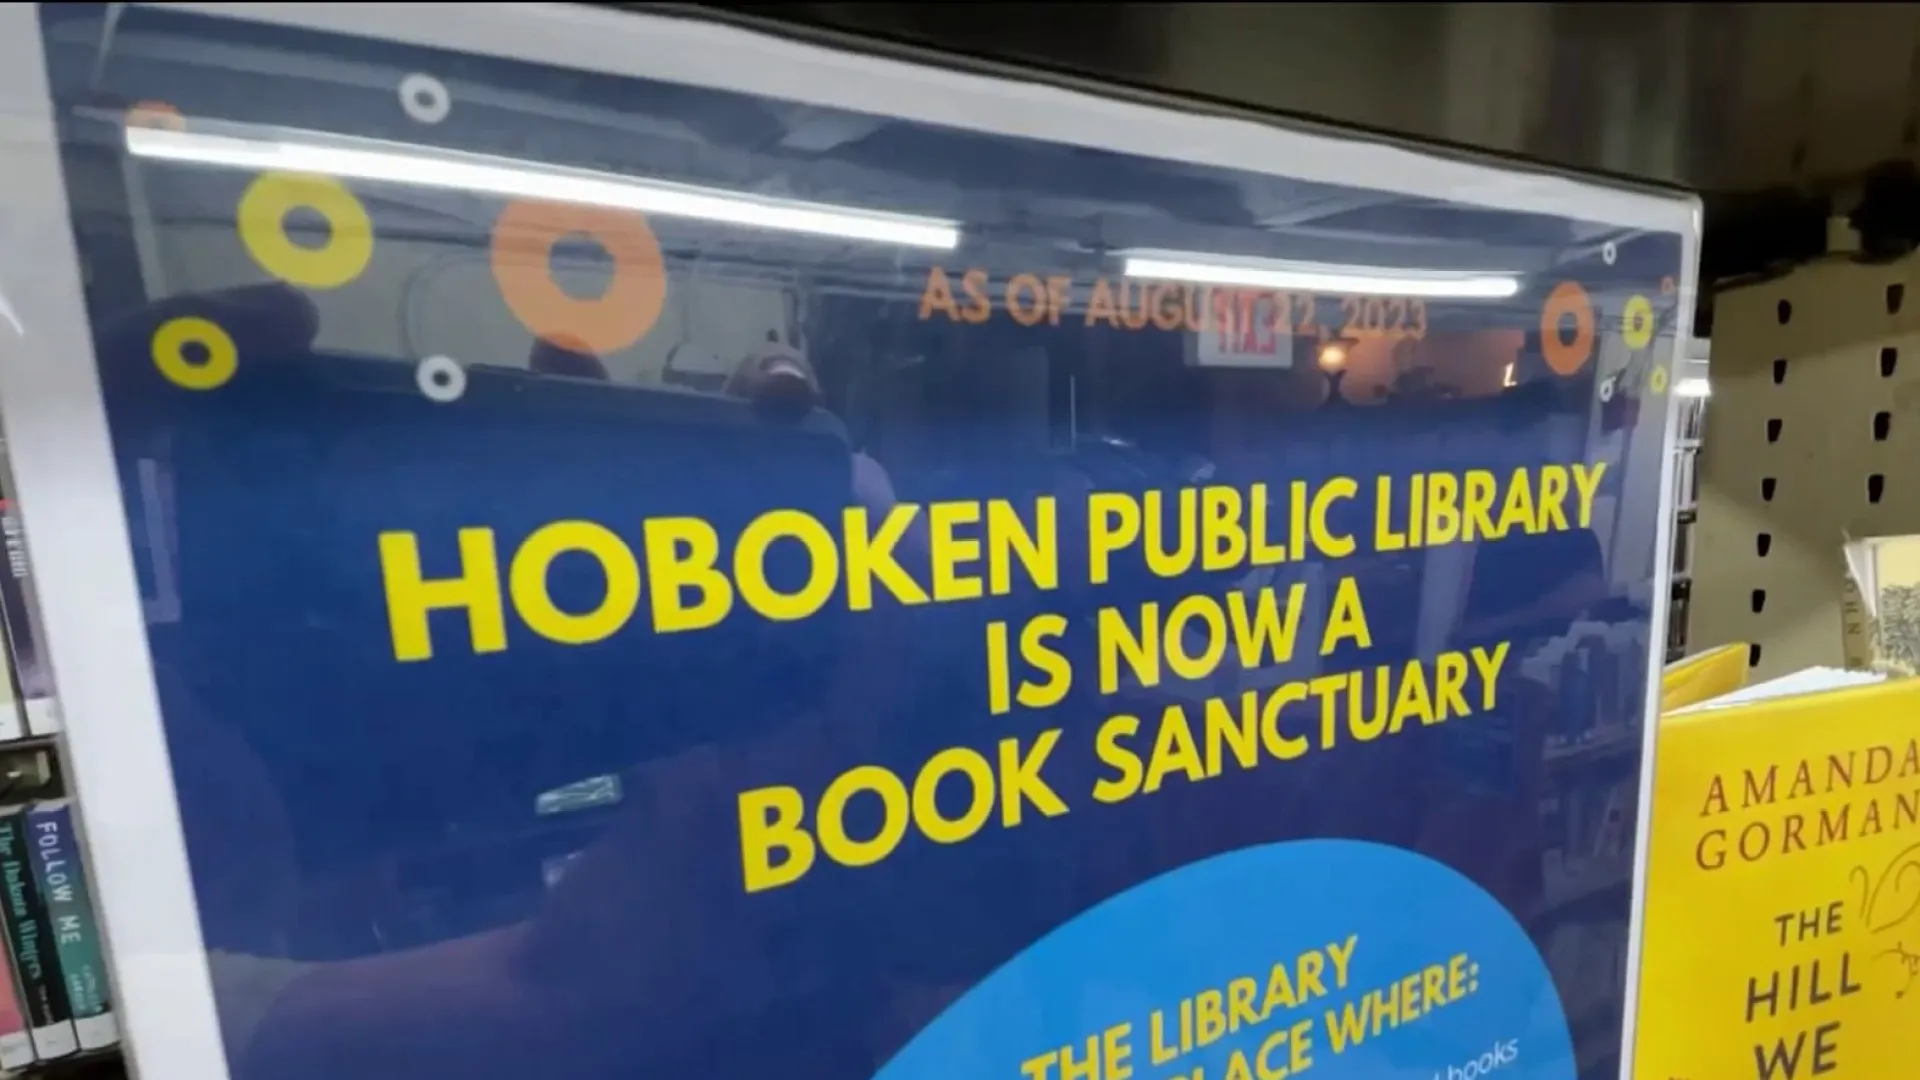 Hoboken Book Sanctuary